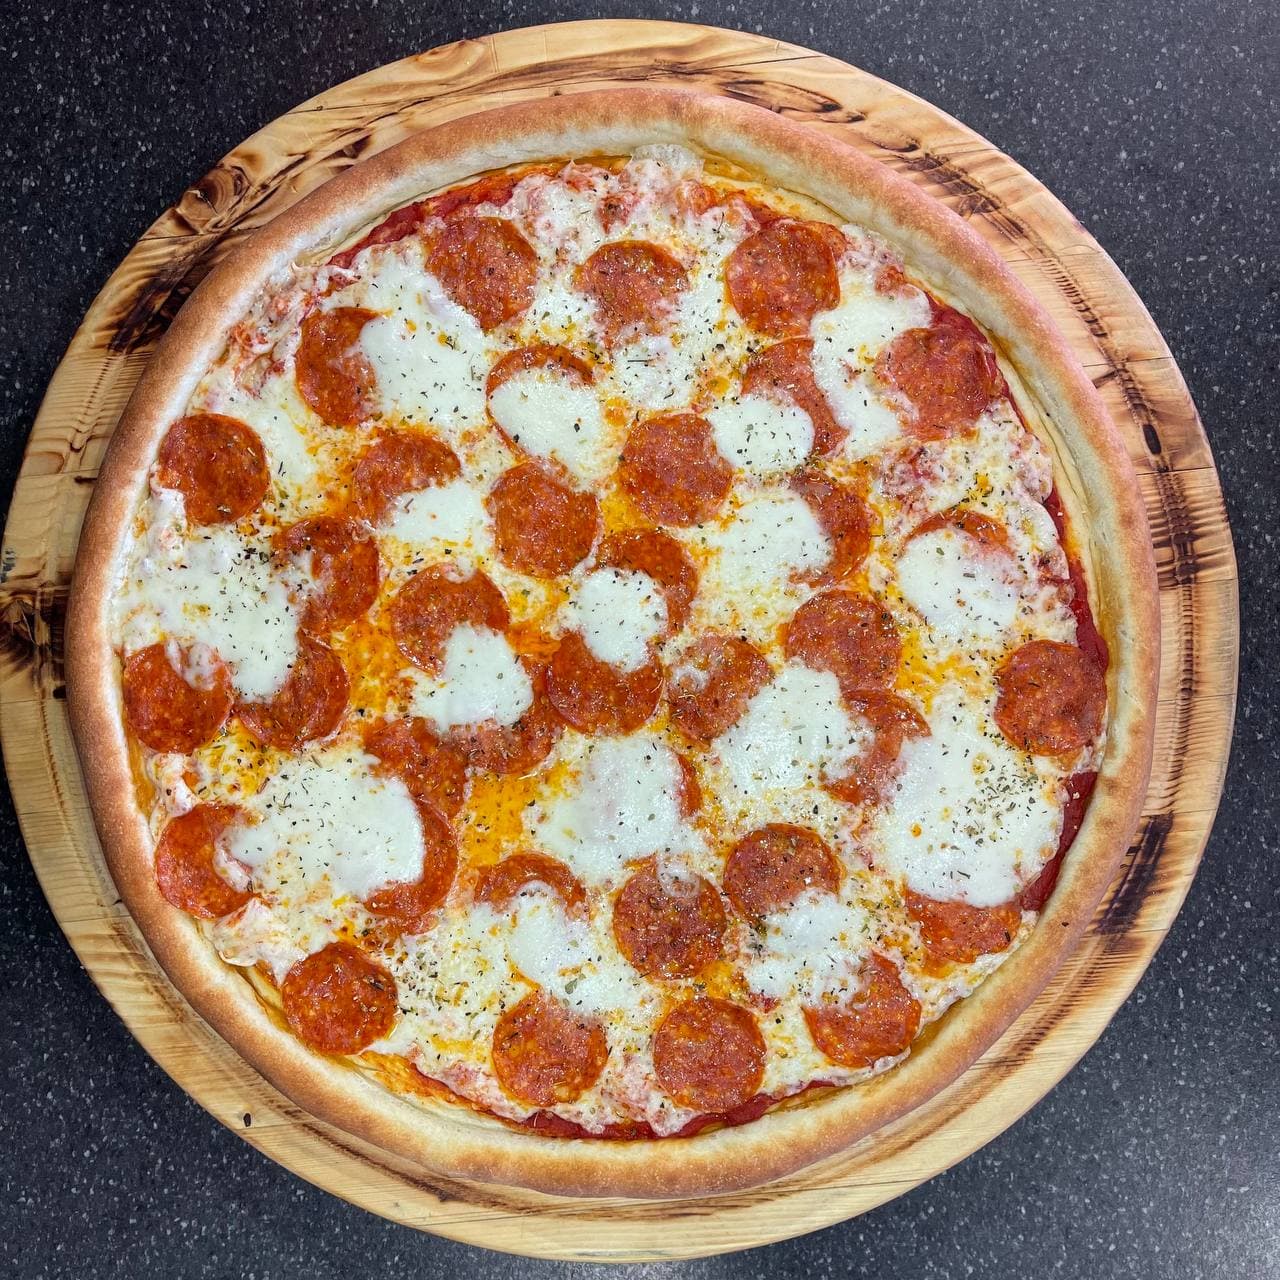 сколько стоит пицца пепперони в додо пицце фото 41